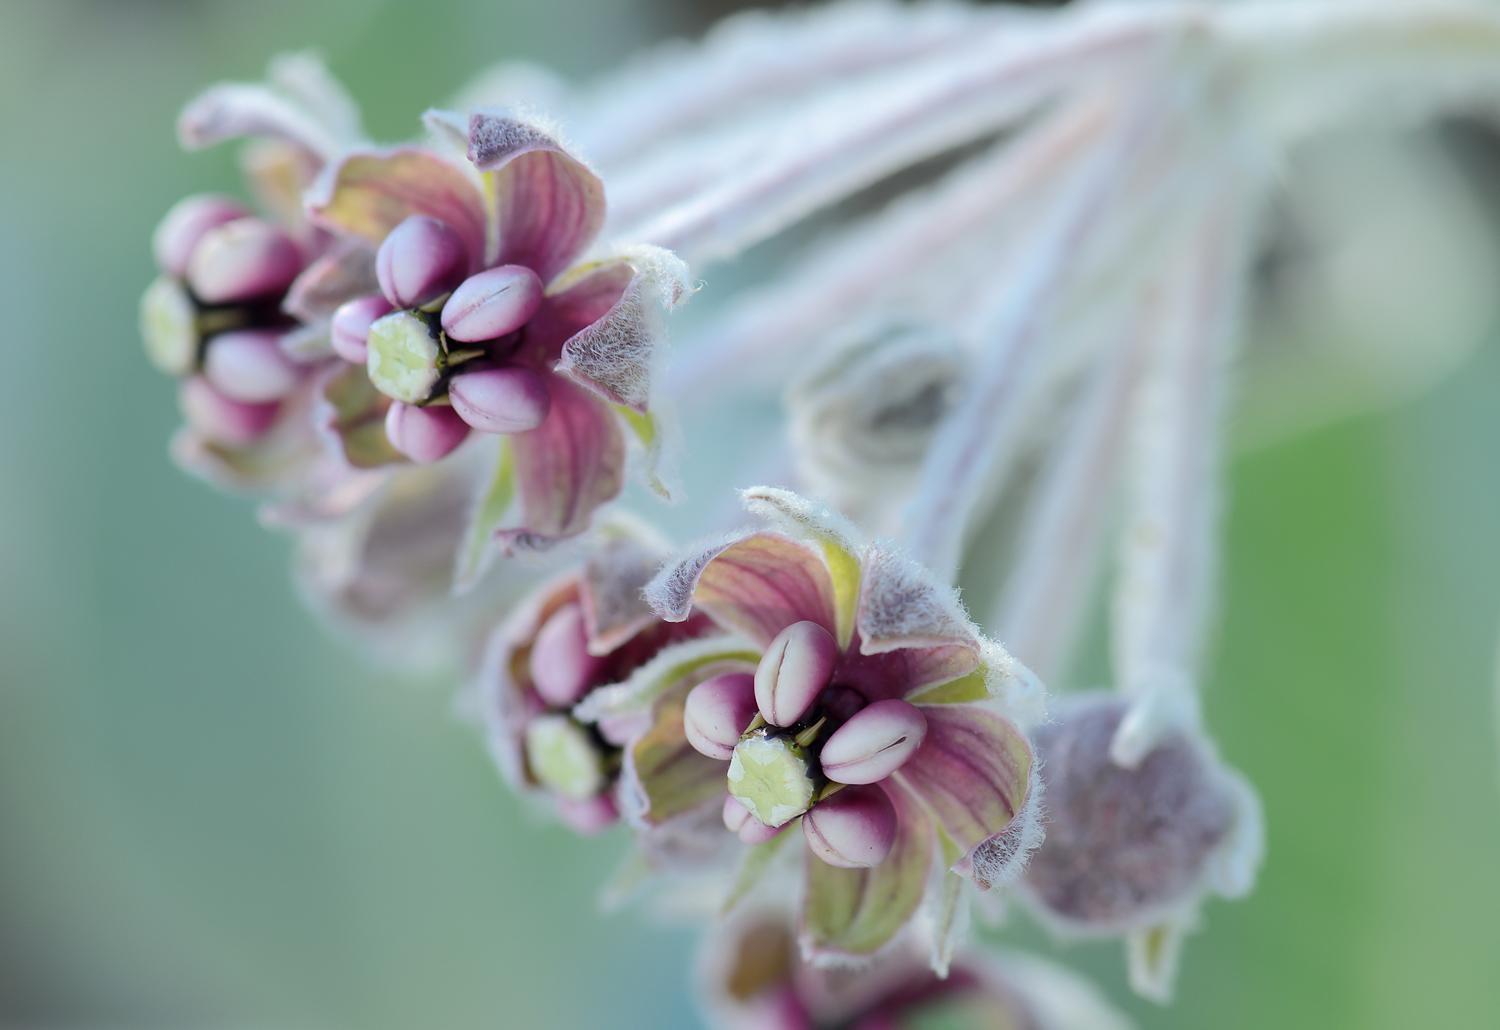 California milkweed Photo by Candace Fallon